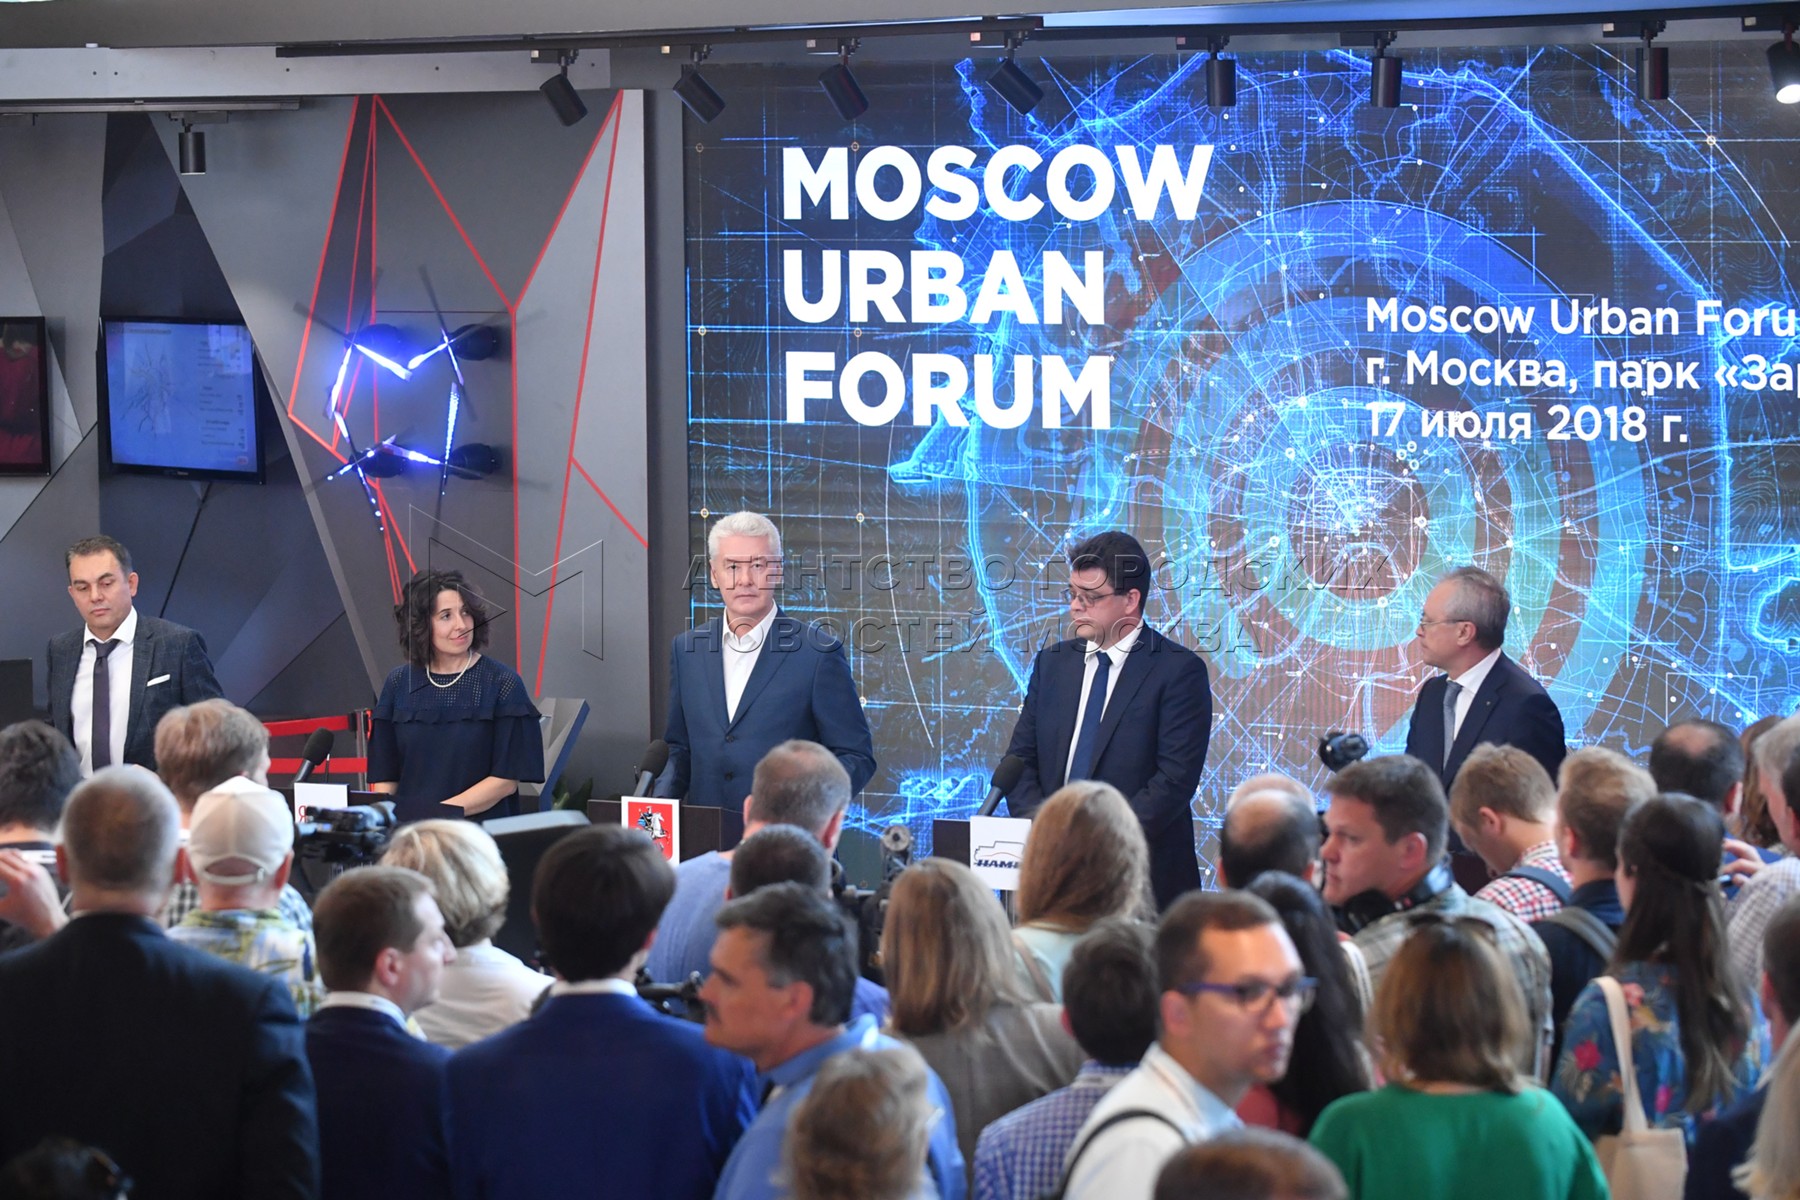 Forums 2018. Московский урбанистический форум. Moscow Urban forum. Moscow Urban forum 22.